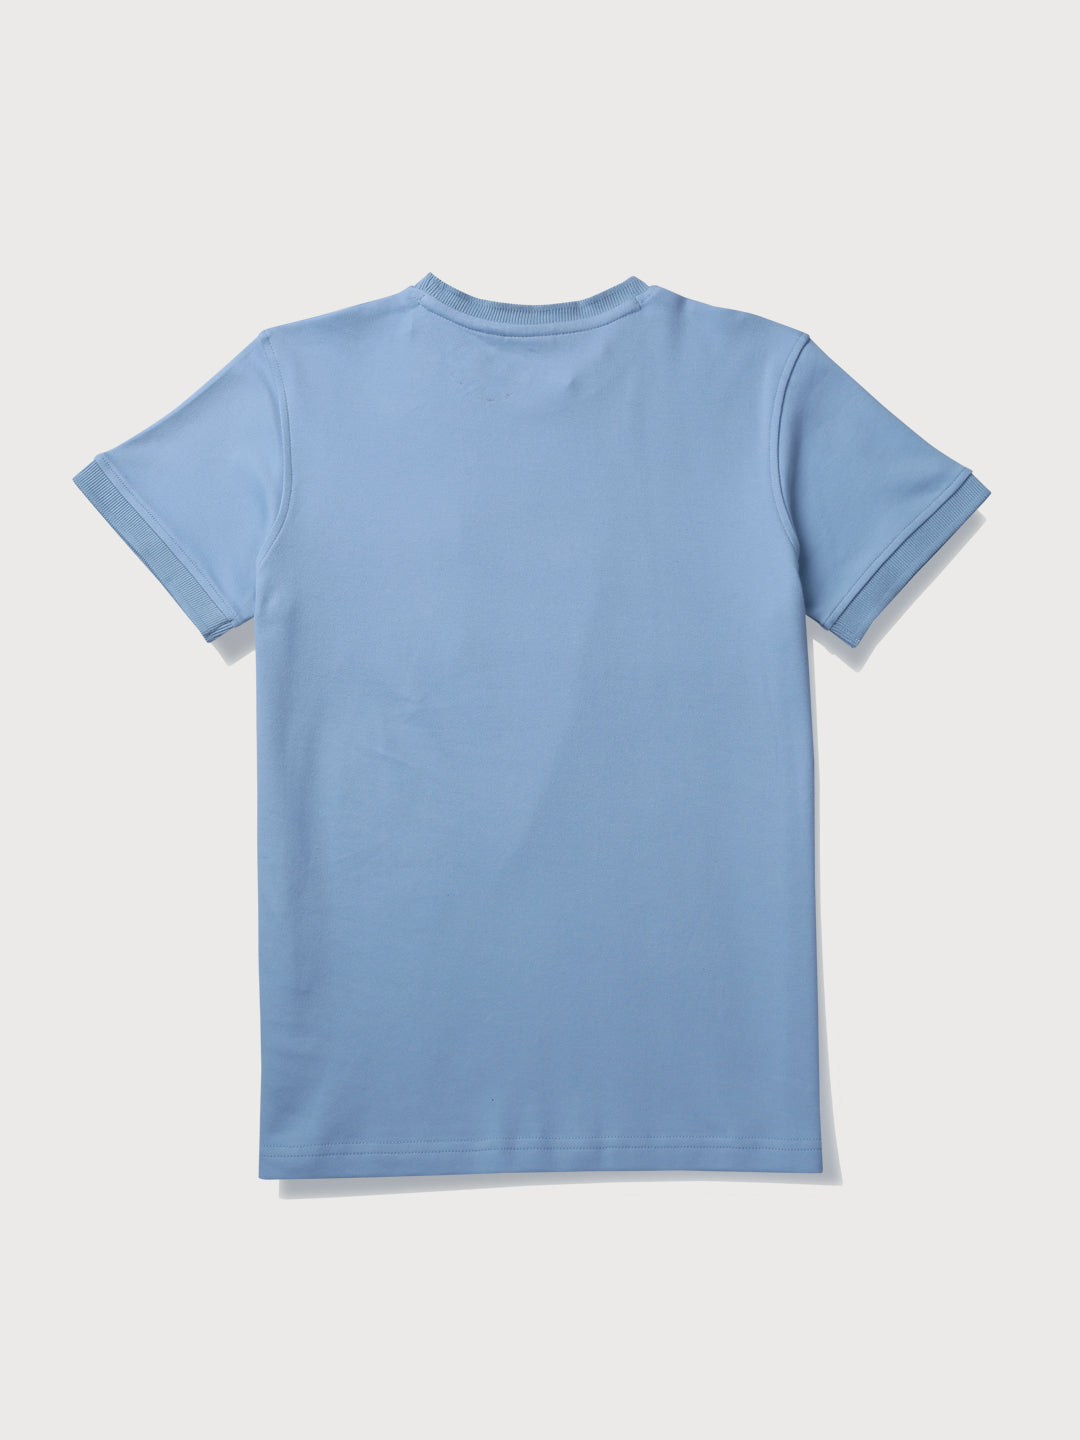 Boys Blue Solid Knits T-Shirt